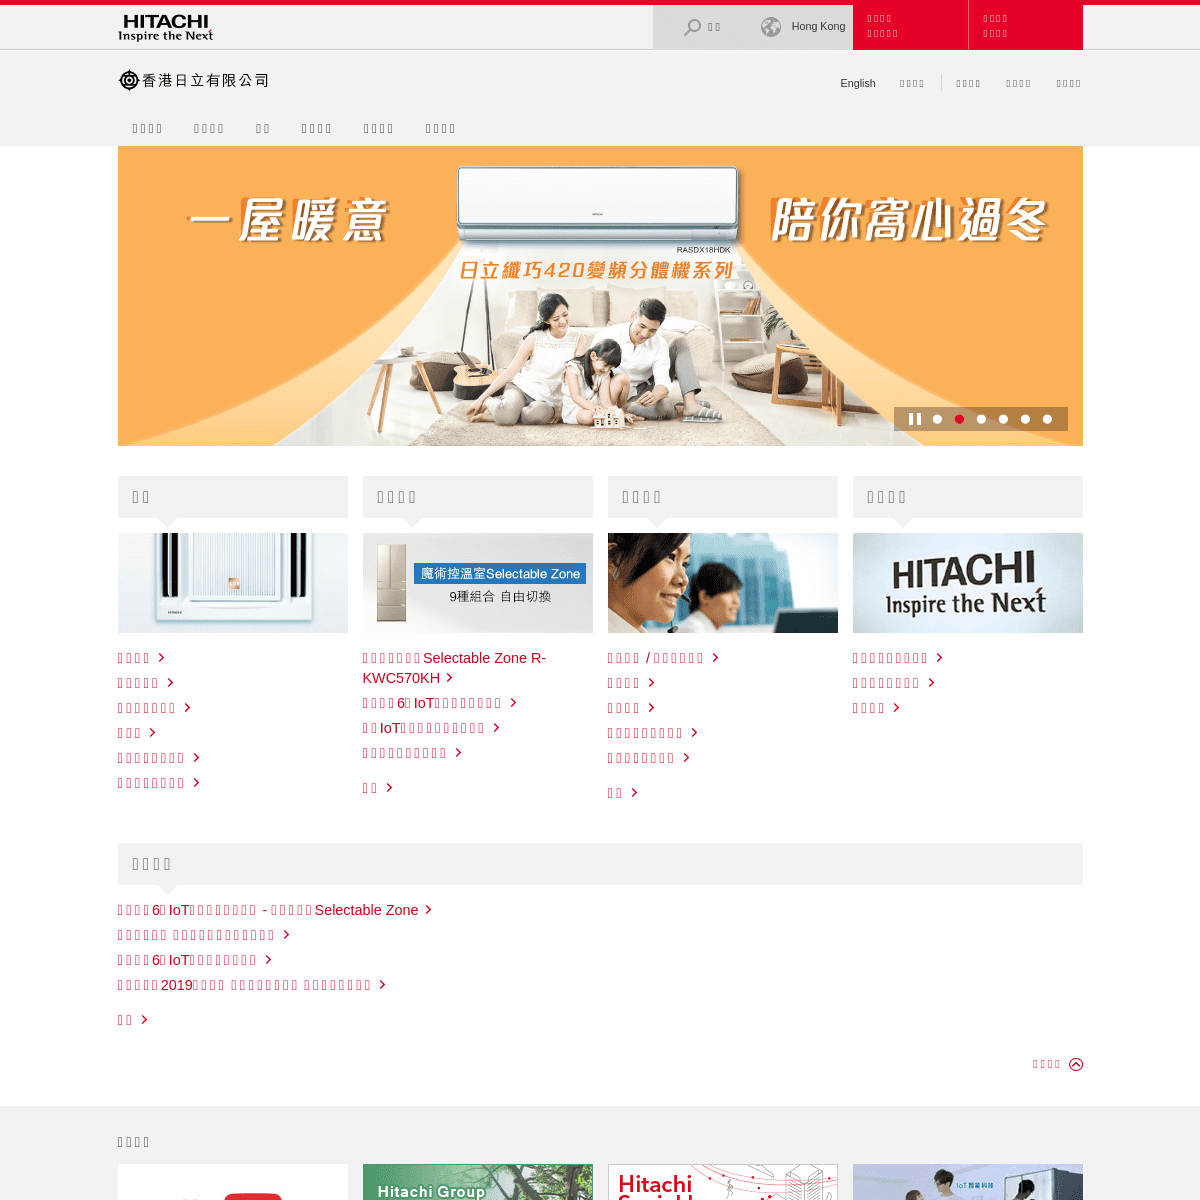 A complete backup of hitachi-hk.com.hk